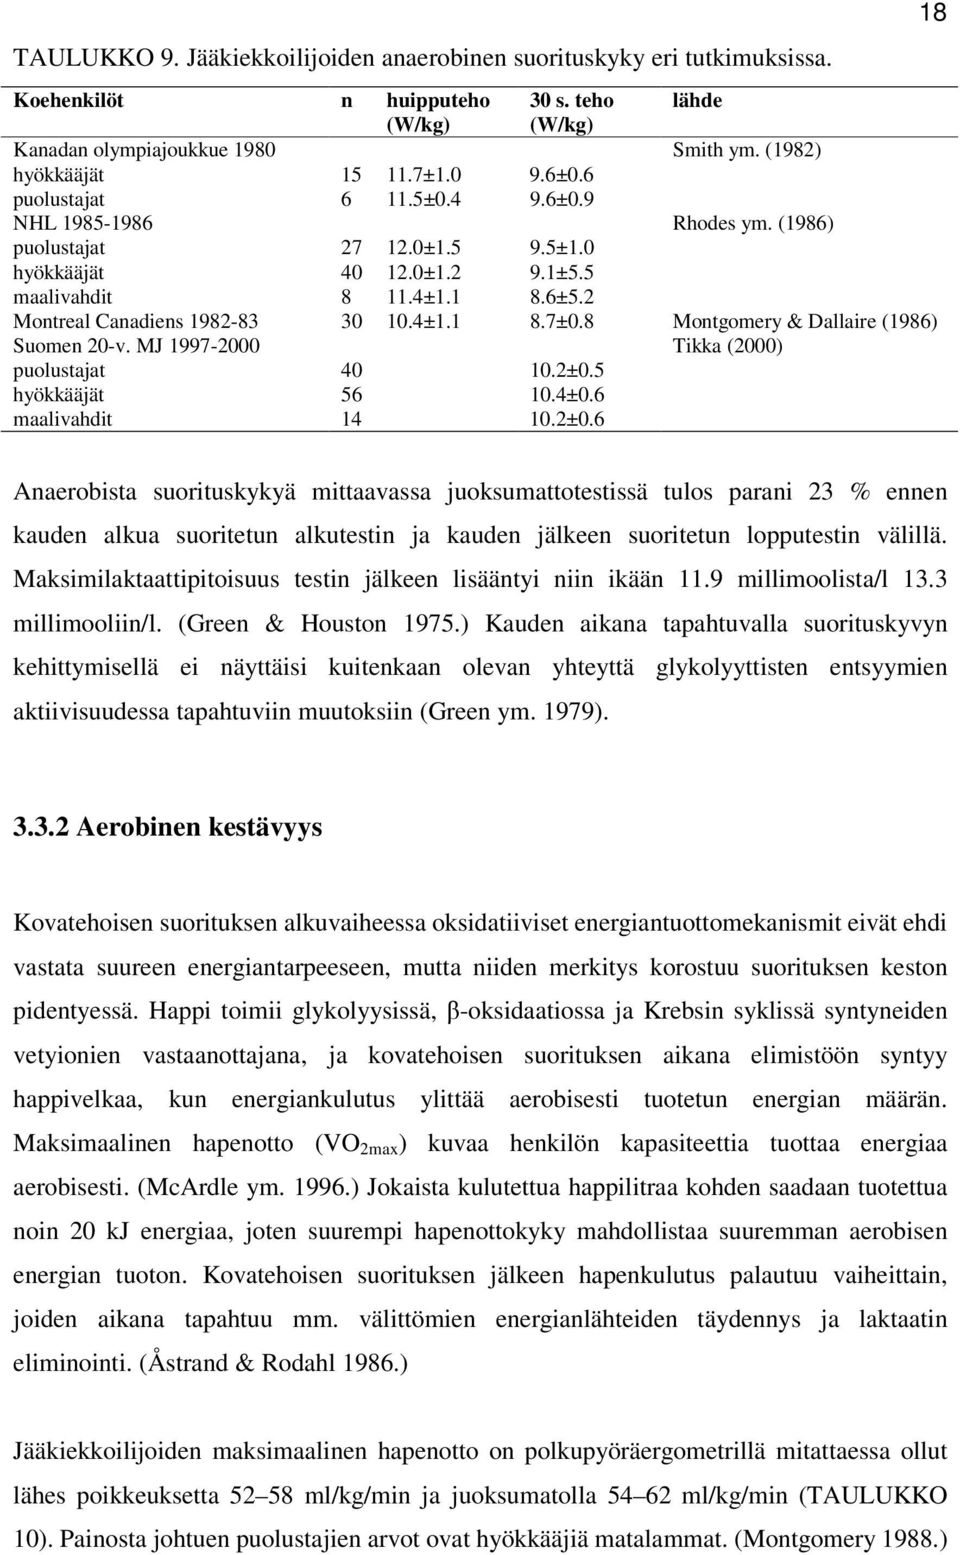 4±1.1 8.7±0.8 Montgomery & Dallaire (1986) Suomen 20-v. MJ 1997-2000 Tikka (2000) puolustajat 40 10.2±0.